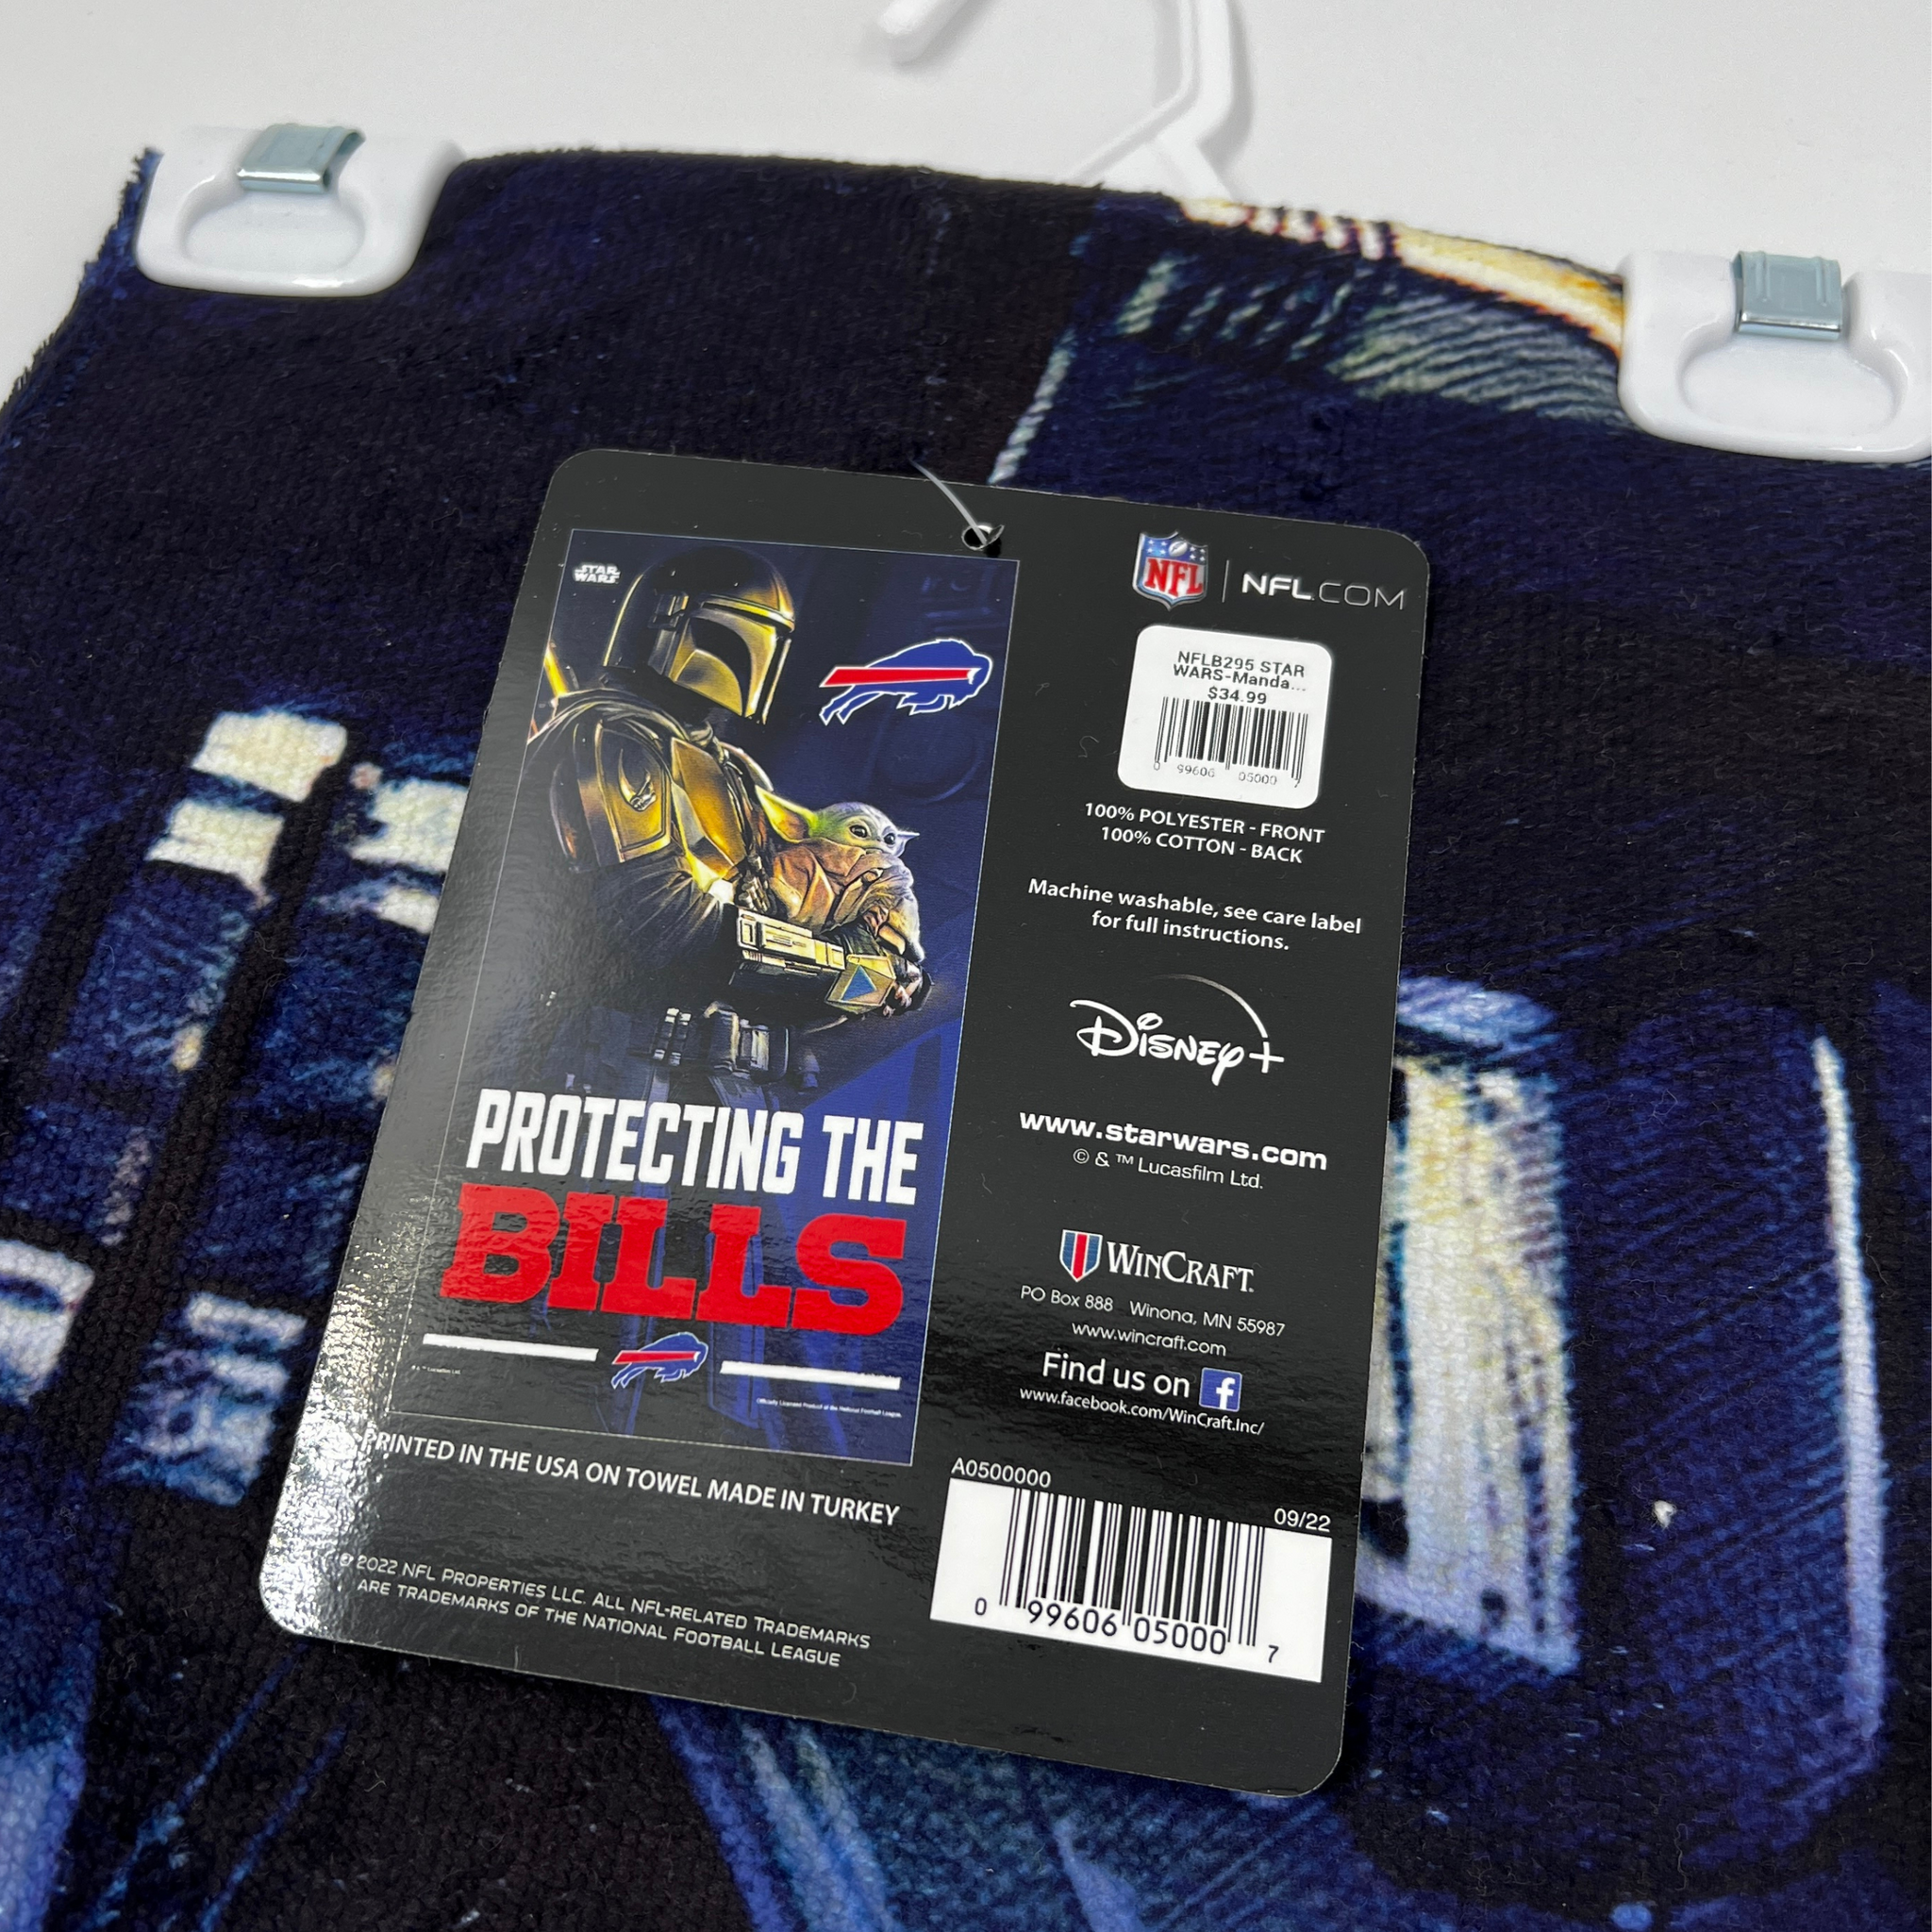 Buffalo Bills x Mandalorian "Protecting the Bills" Star Wars Beach Towel